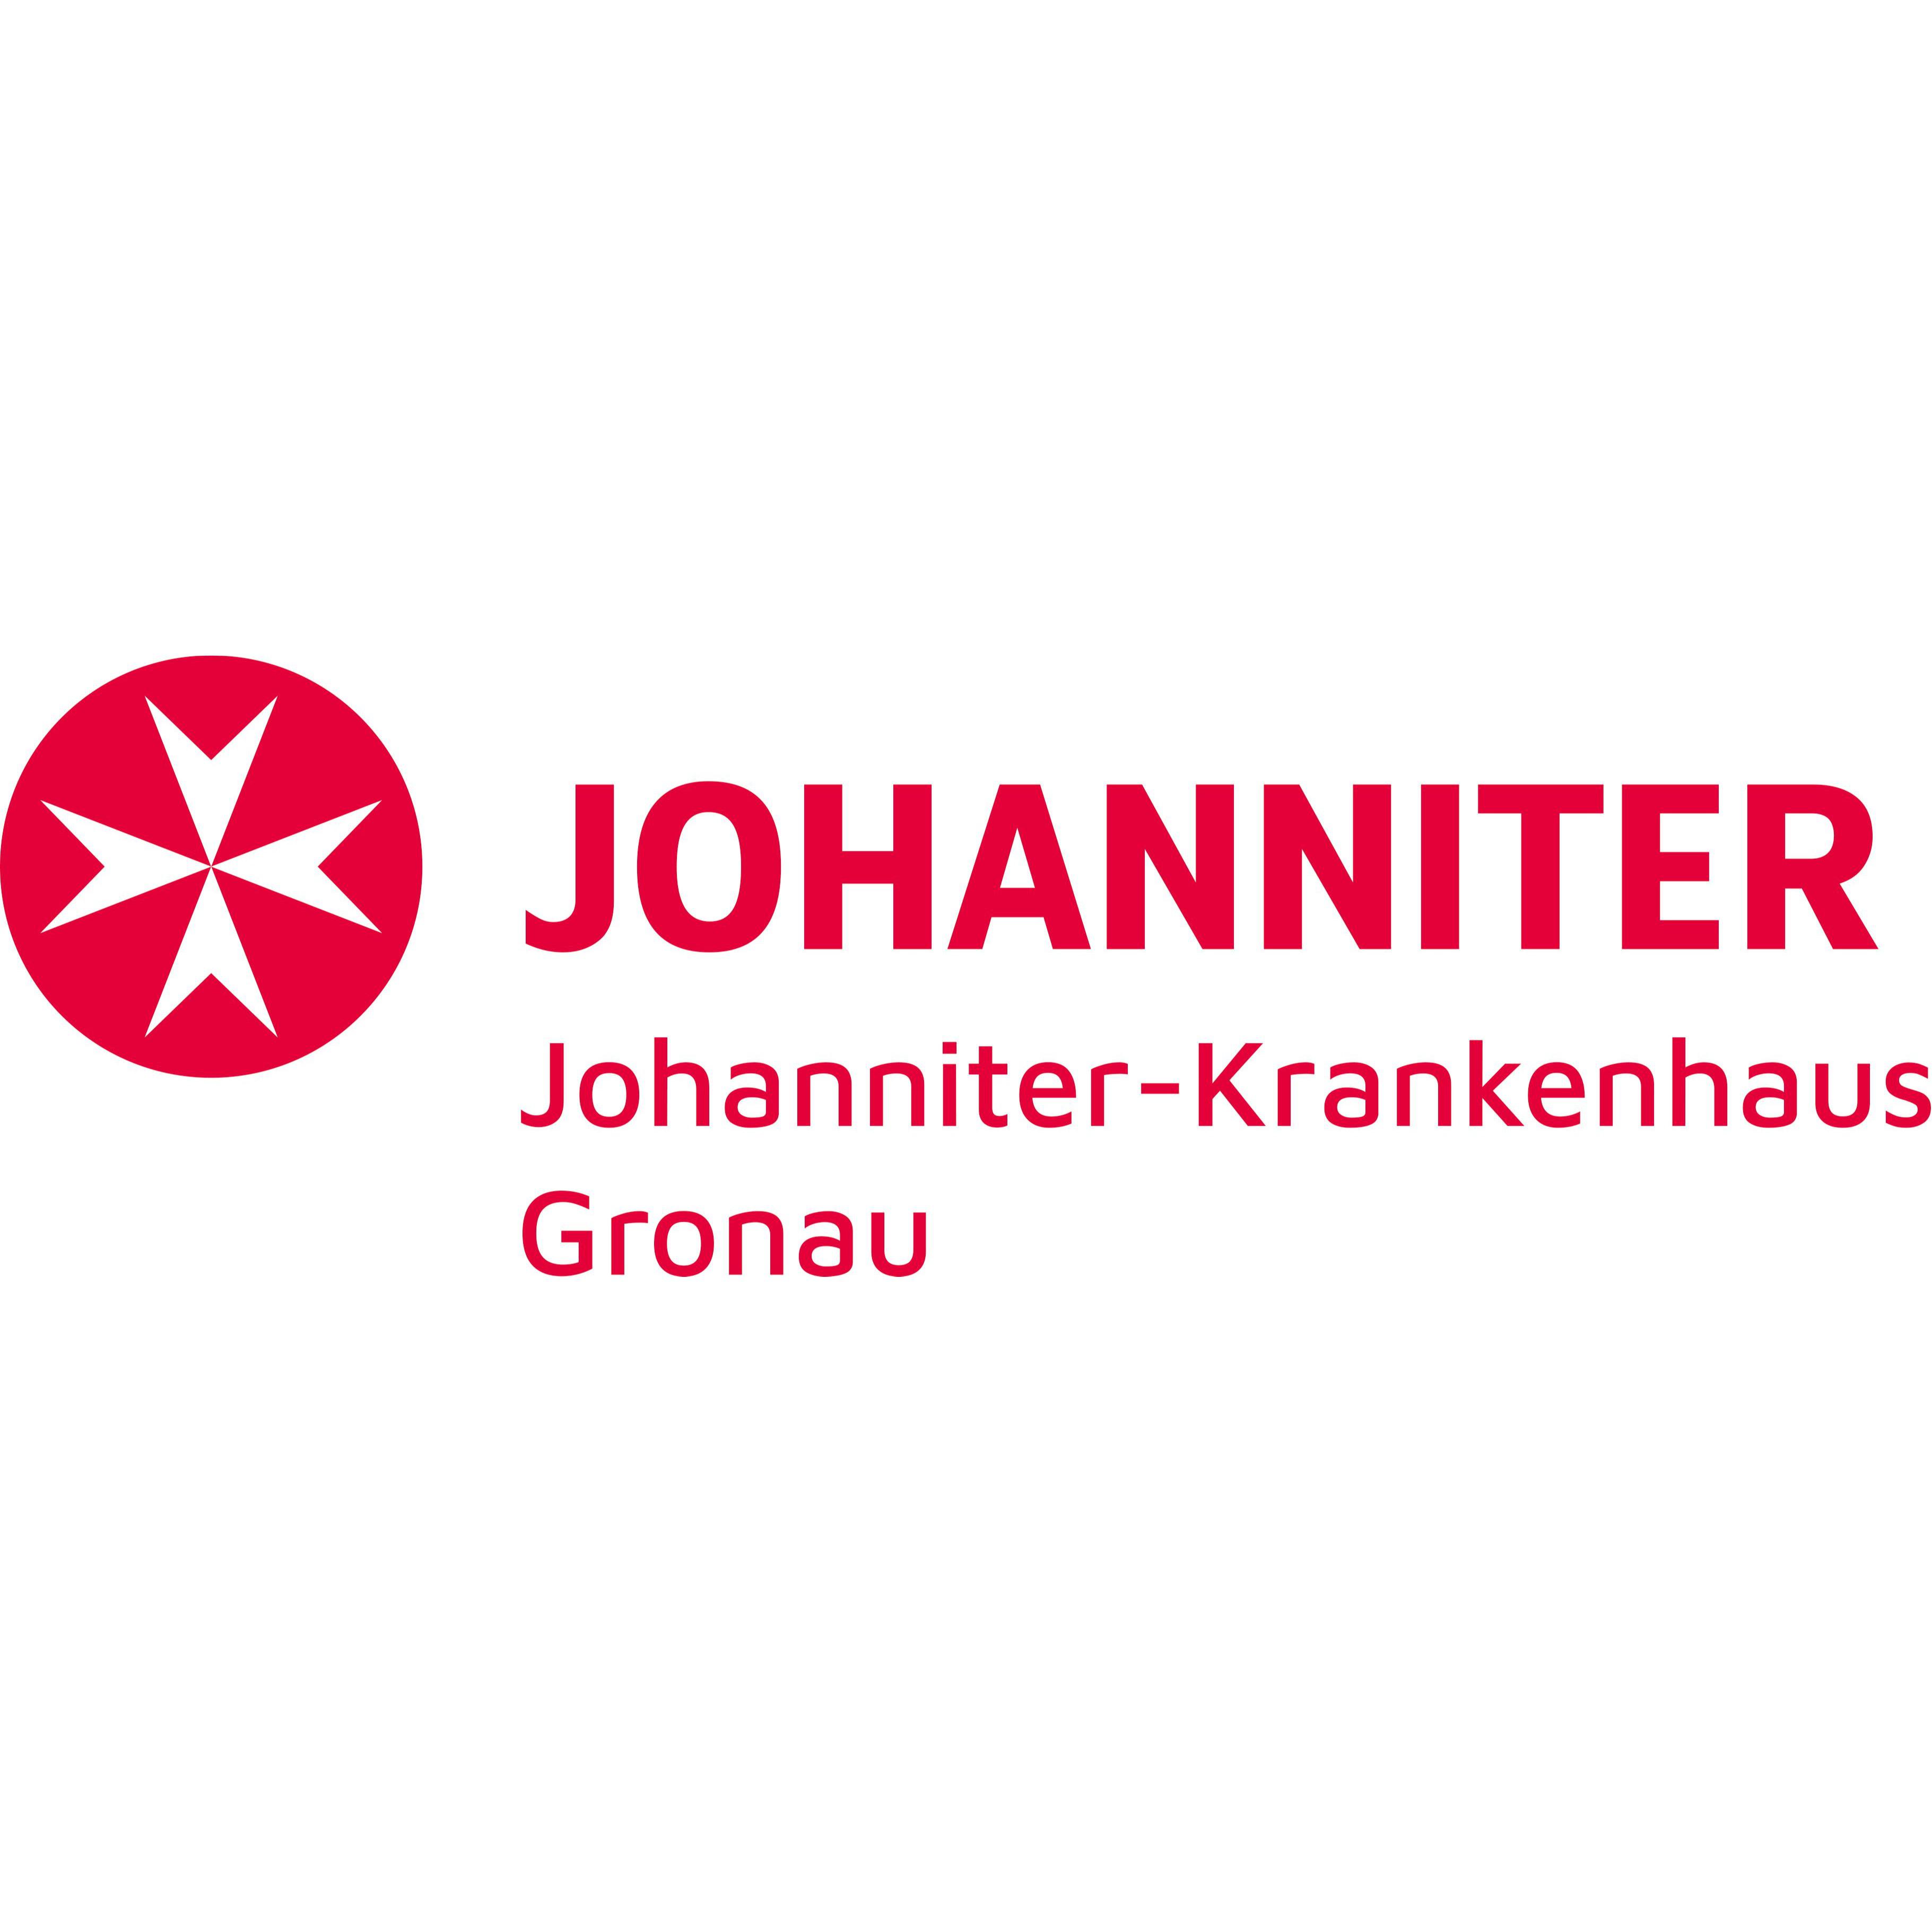 Johanniter-Krankenhaus Gronau  